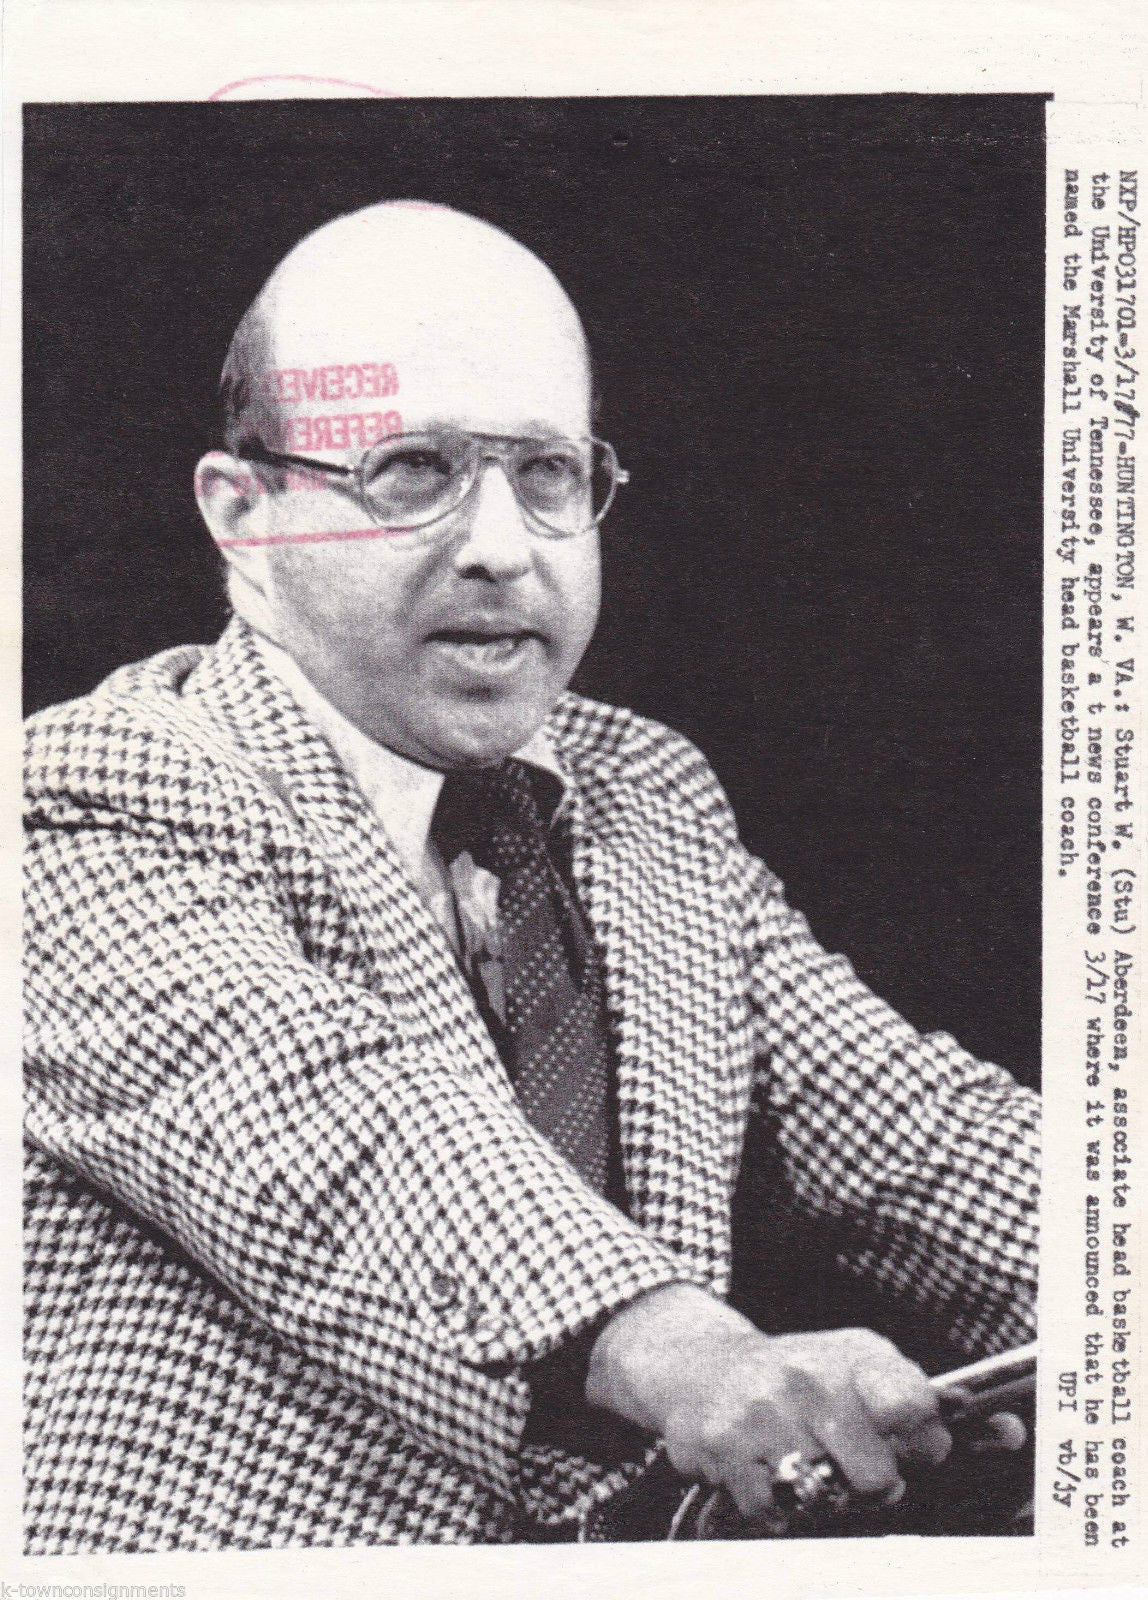 STU ABERDEEN UNIVERSITY OF TENNESSEE NCAA BASKETBALL COACH 1970s PRESS PHOTO - K-townConsignments